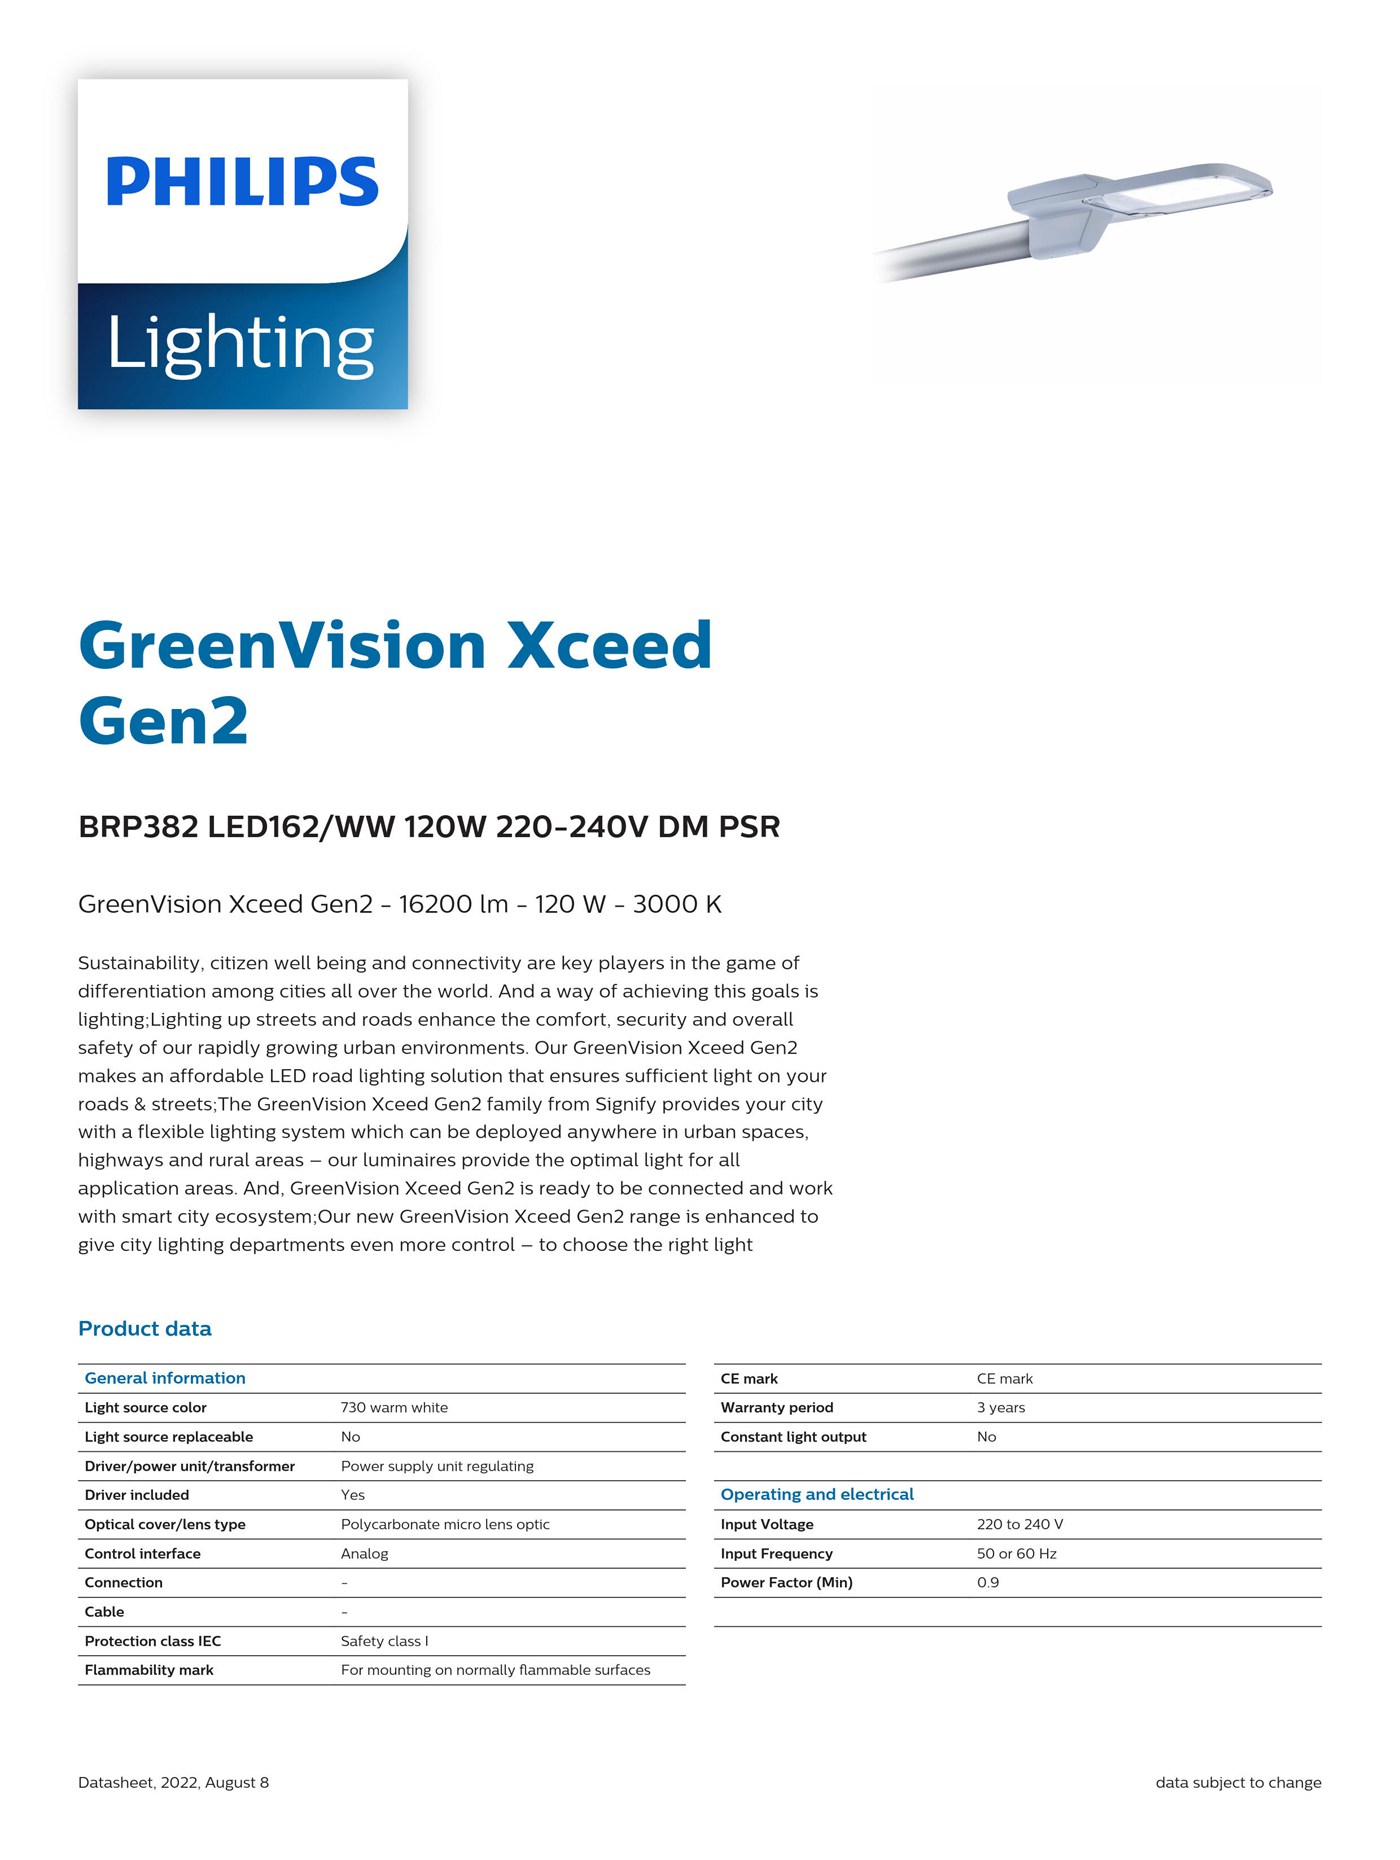 PHILIPS GreenVision Xceed Gen2 BRP382 LED162/WW 120W 220-240V DM PSR 911401877598